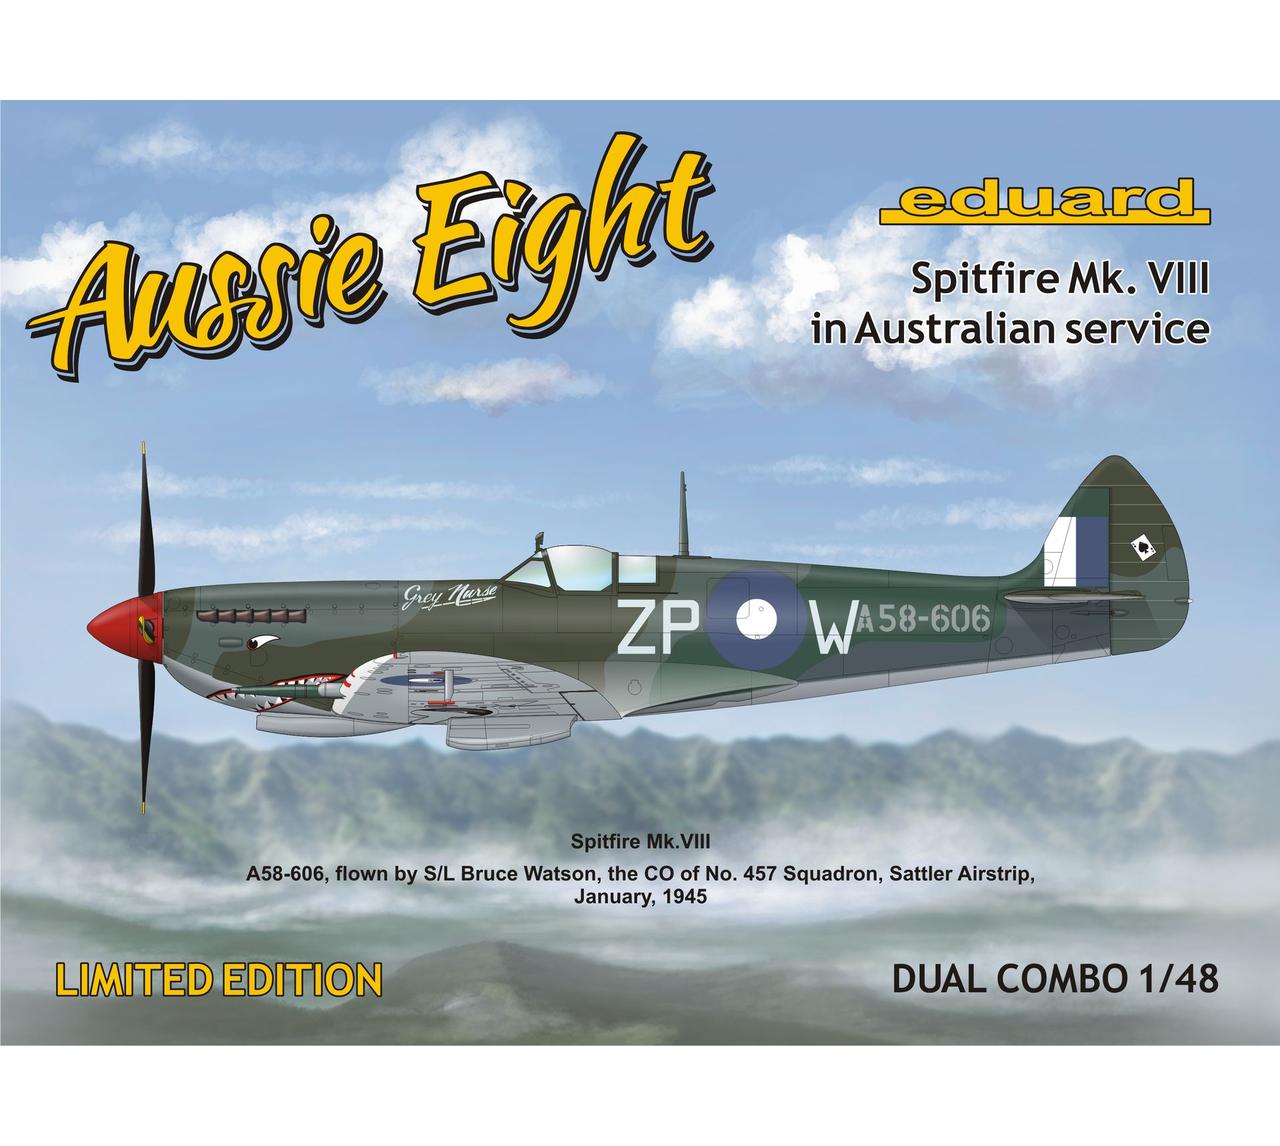 Eduard Spitfire-kavalkad, Aussie Eight #1 klar, Aussie Eight #2 NY!, Bonus: Airfix Spitfire XII - Sida 12 29